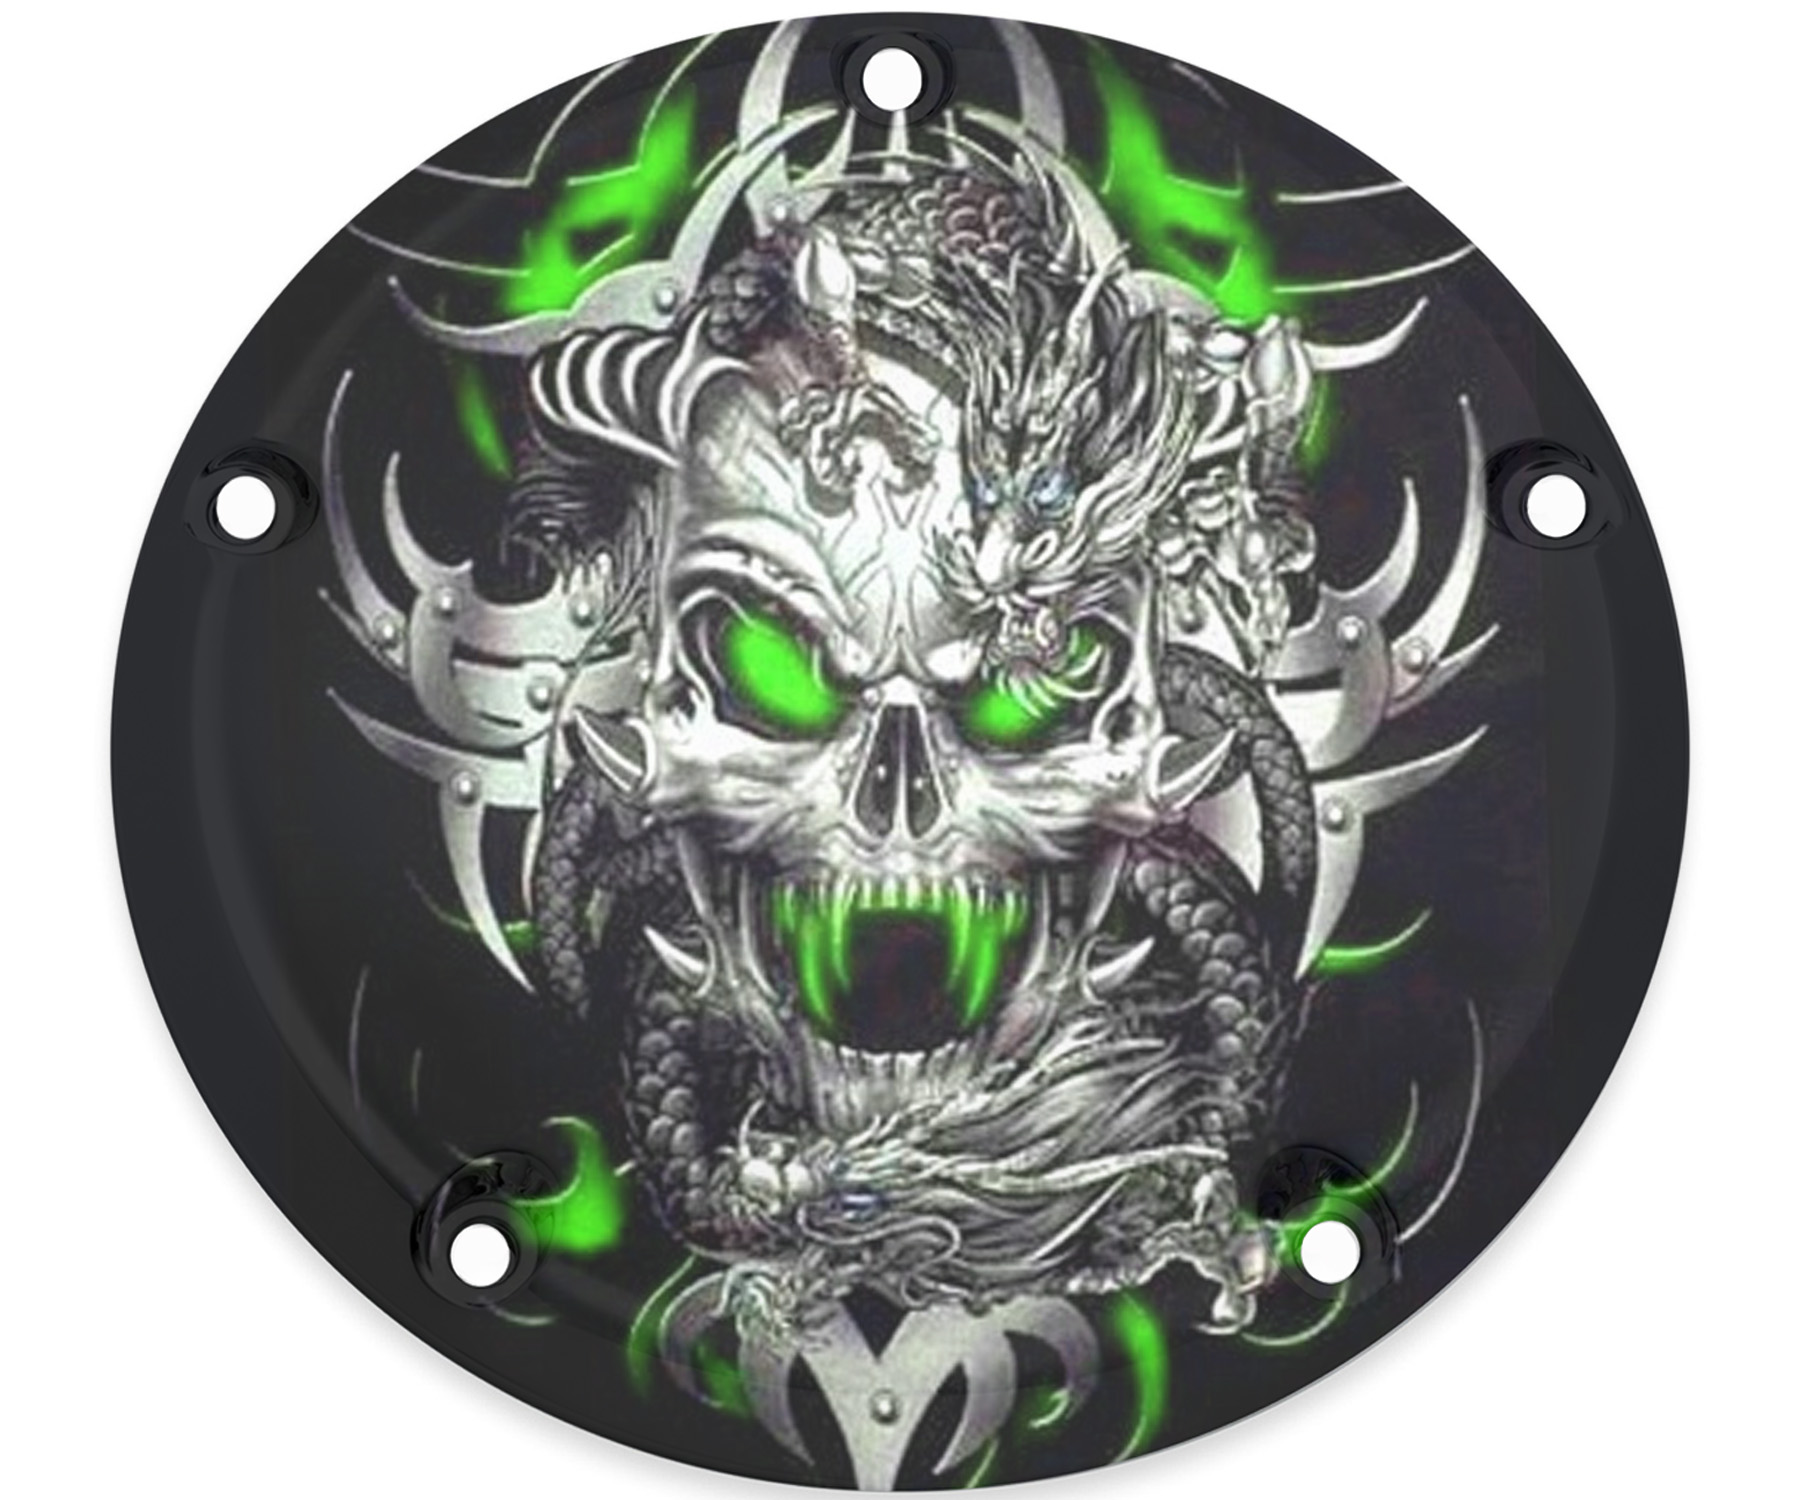 Custom Derby Cover - Dragon Skull (Green)